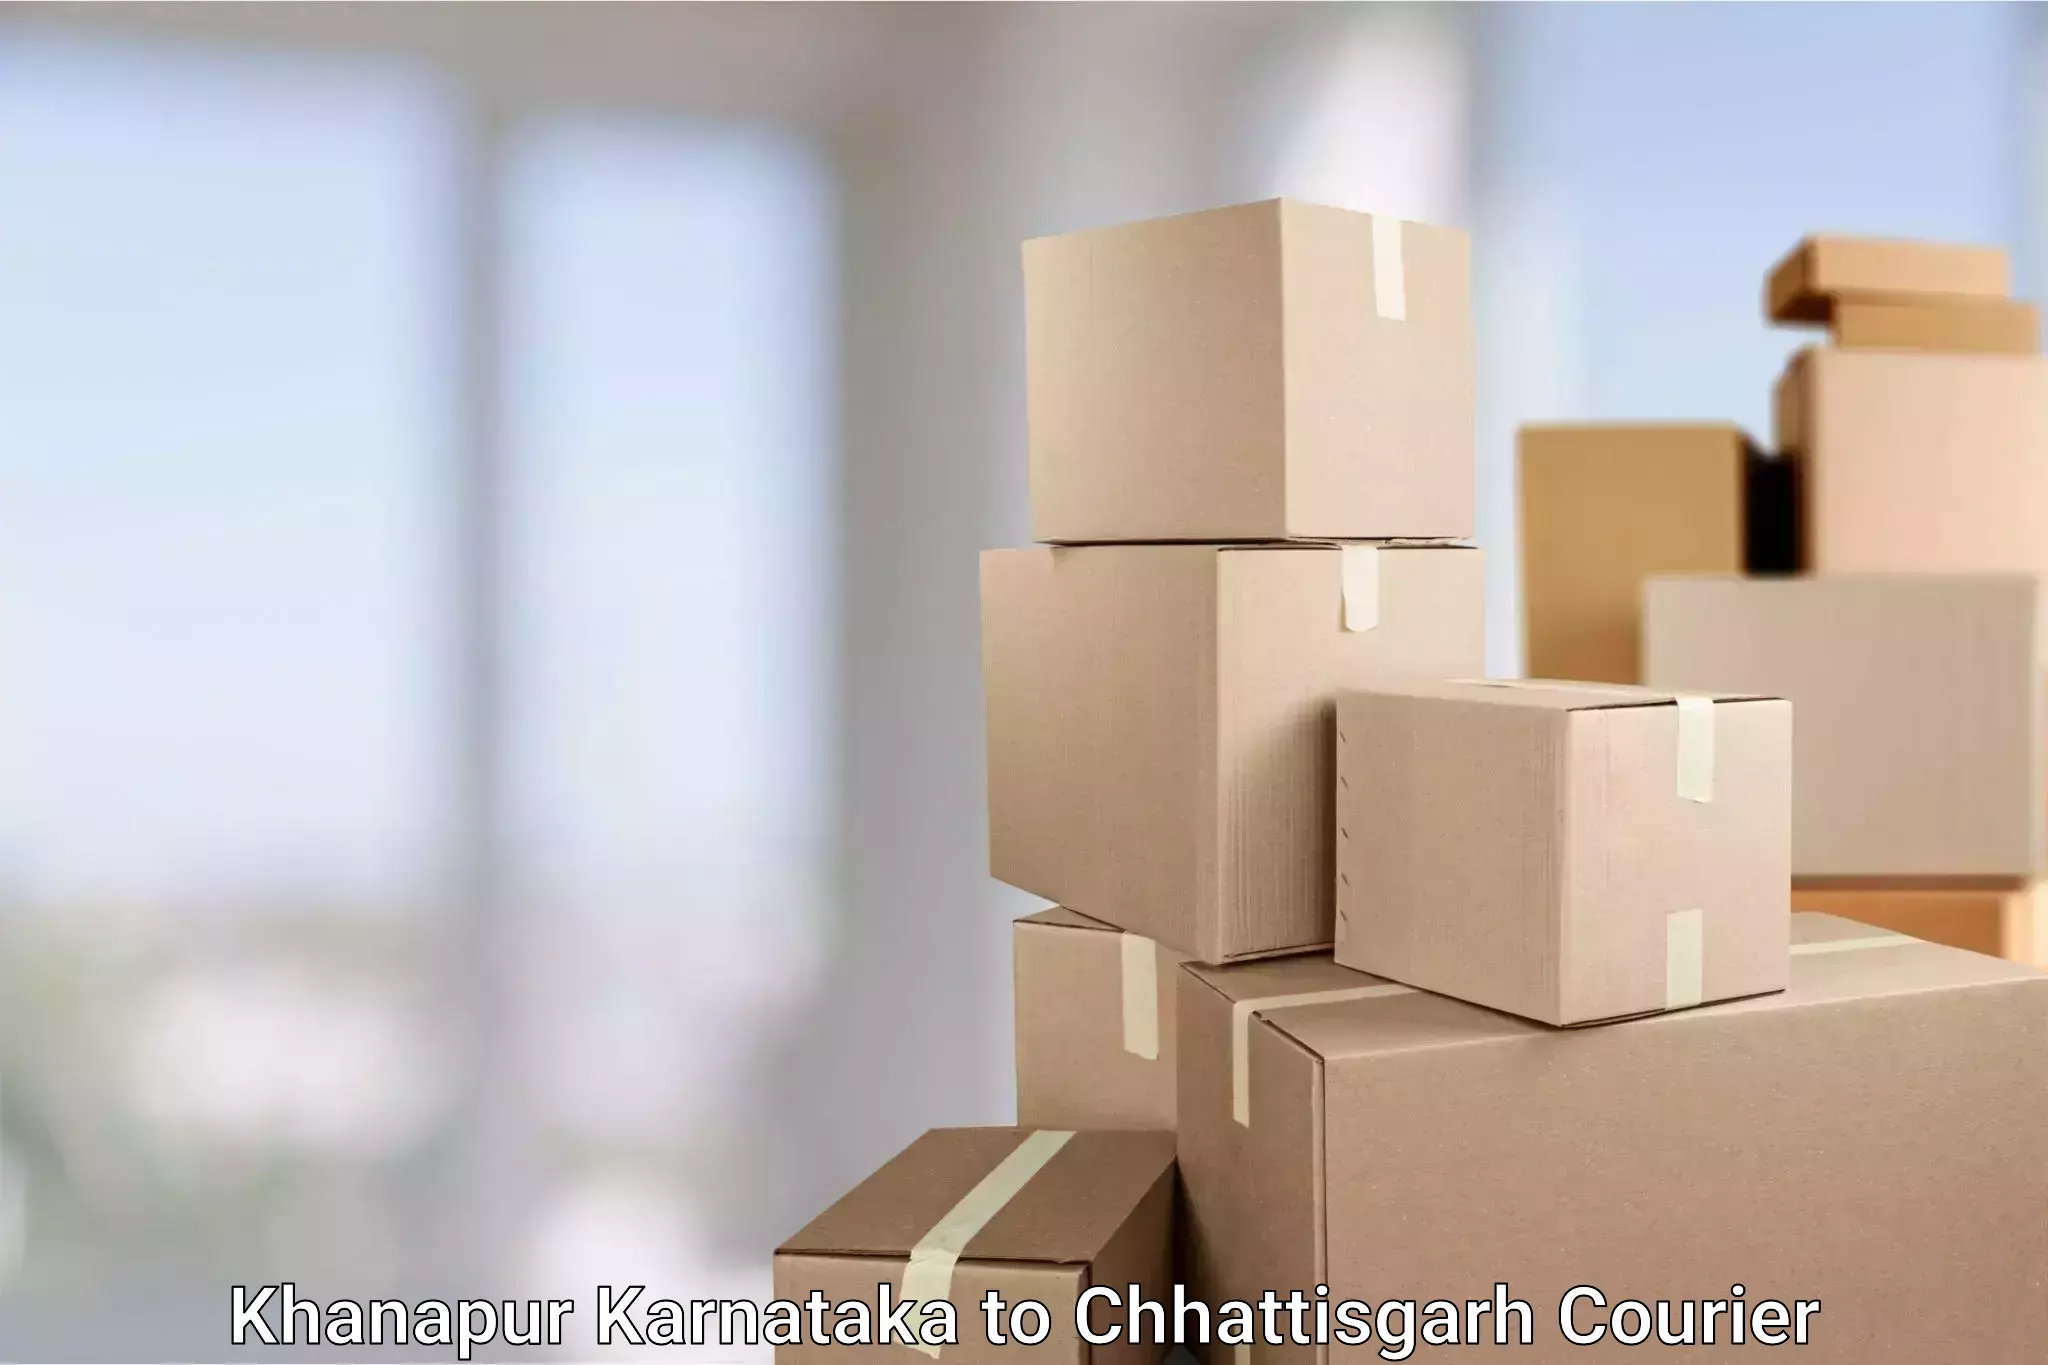 Tailored freight services Khanapur Karnataka to Chhattisgarh